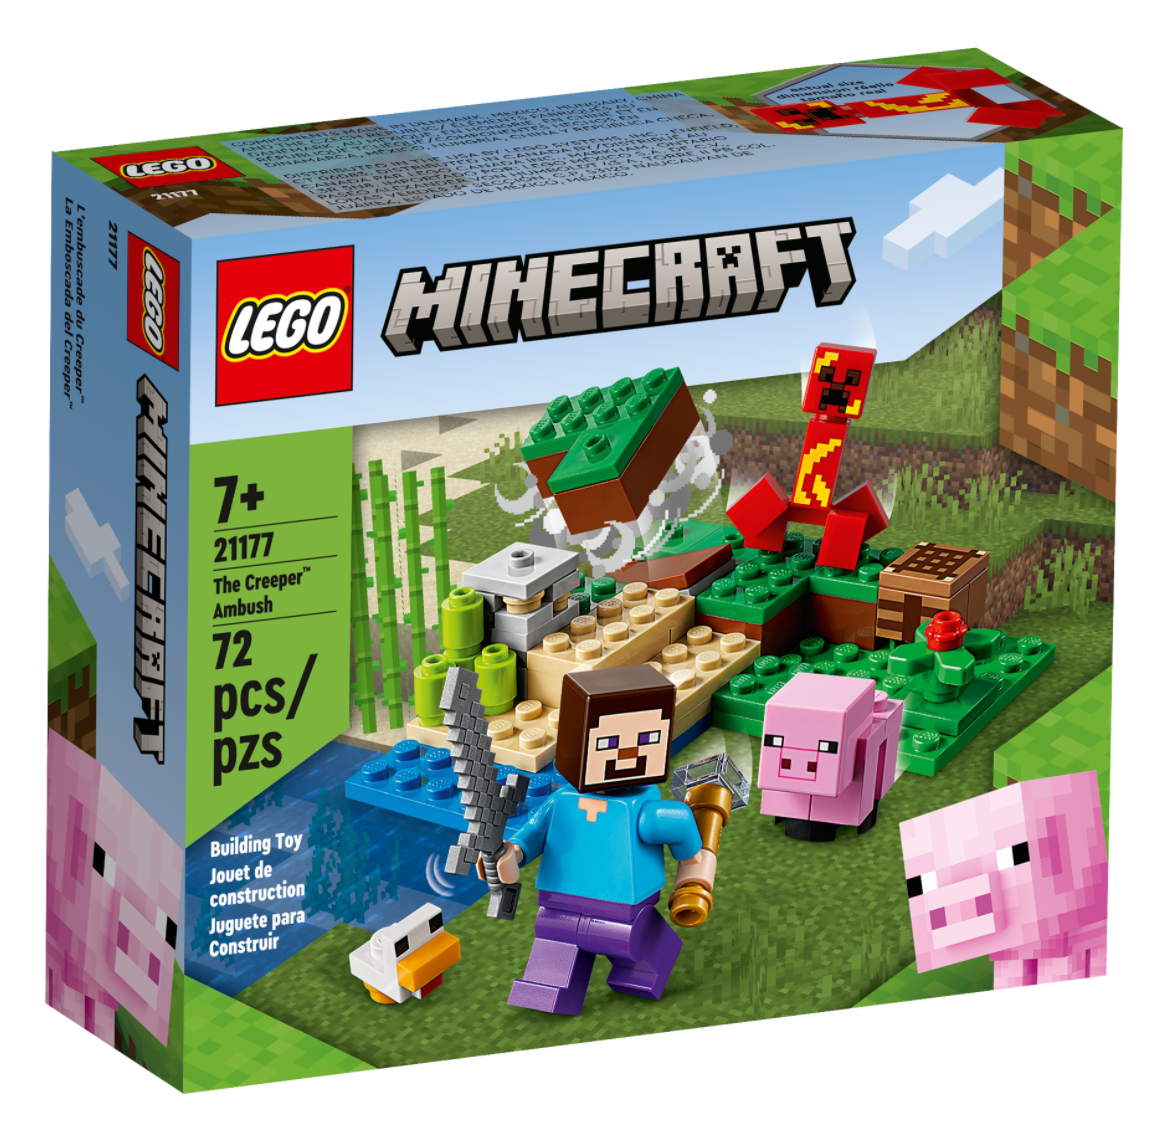 LEGO: Minecraft - The Creeper Ambush